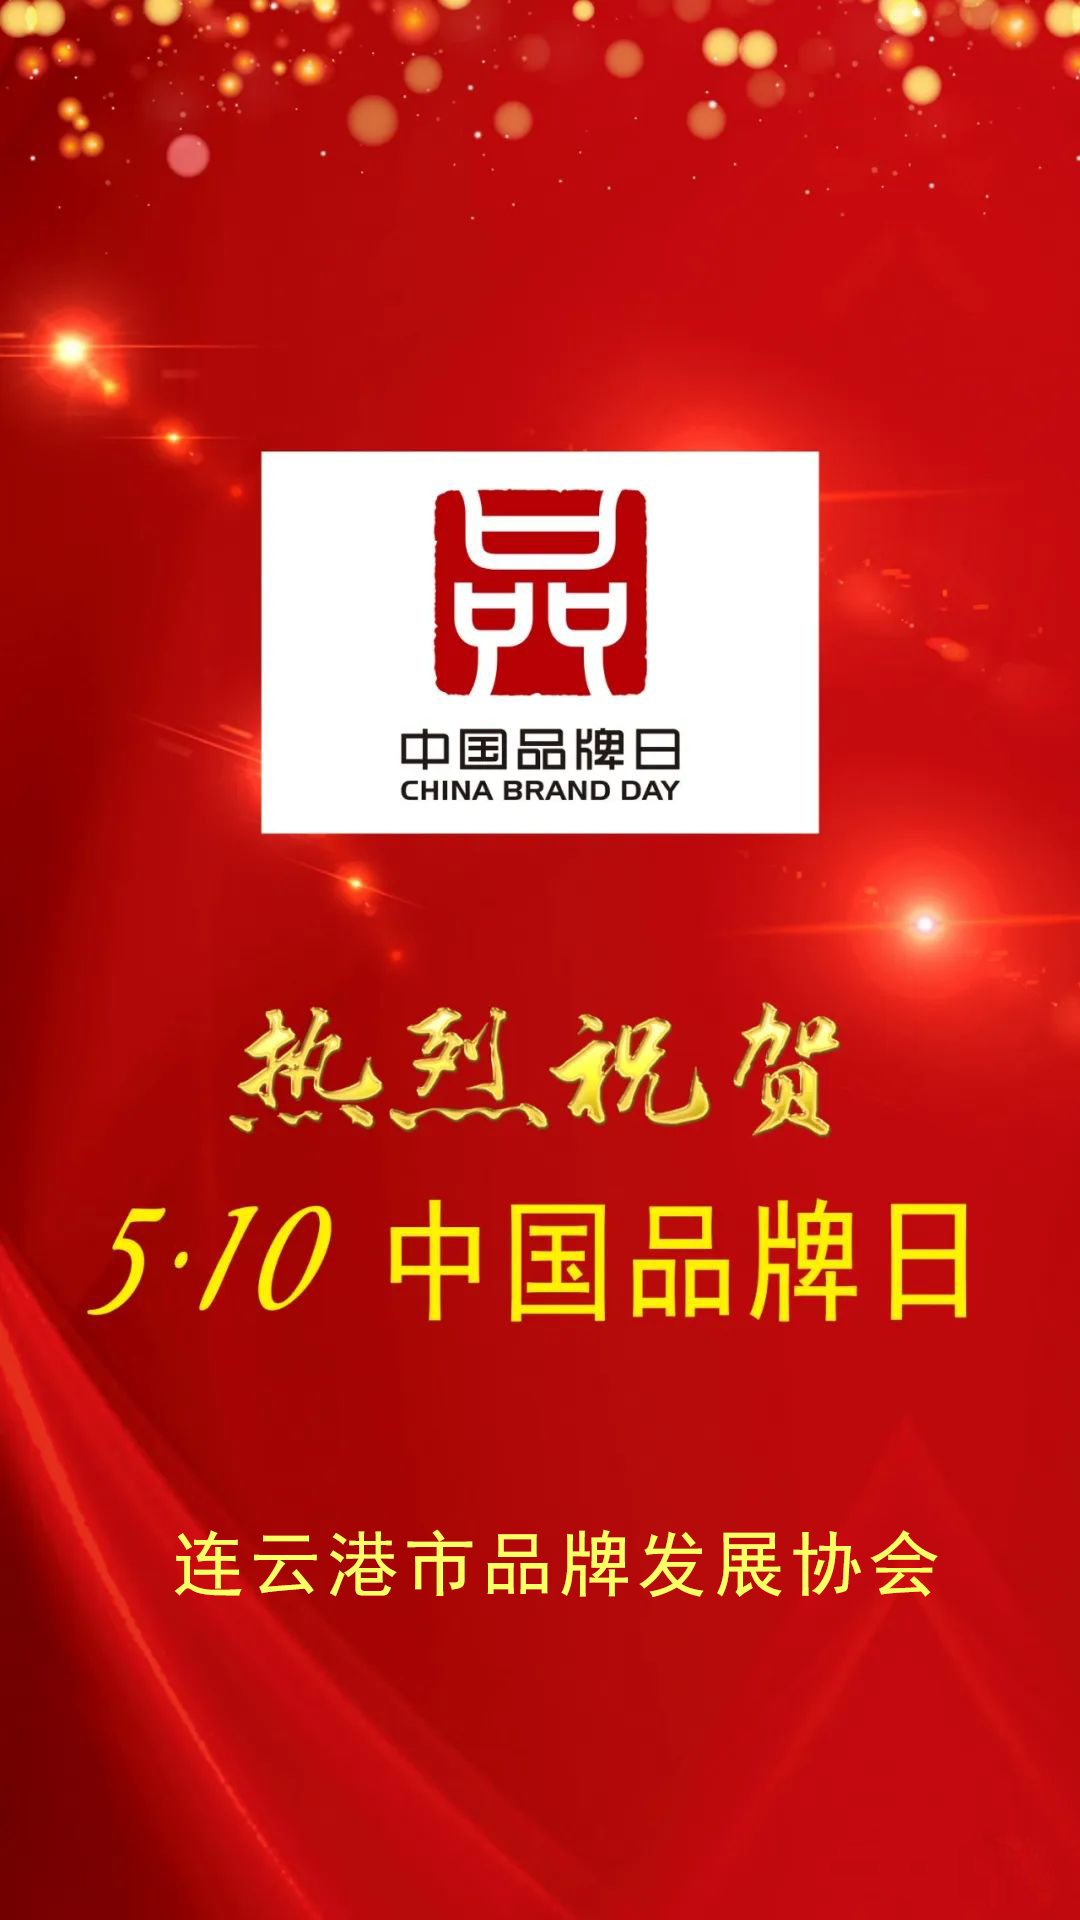 XIDE Elevator warmly congratulates China Brand Day on May 10, 2022